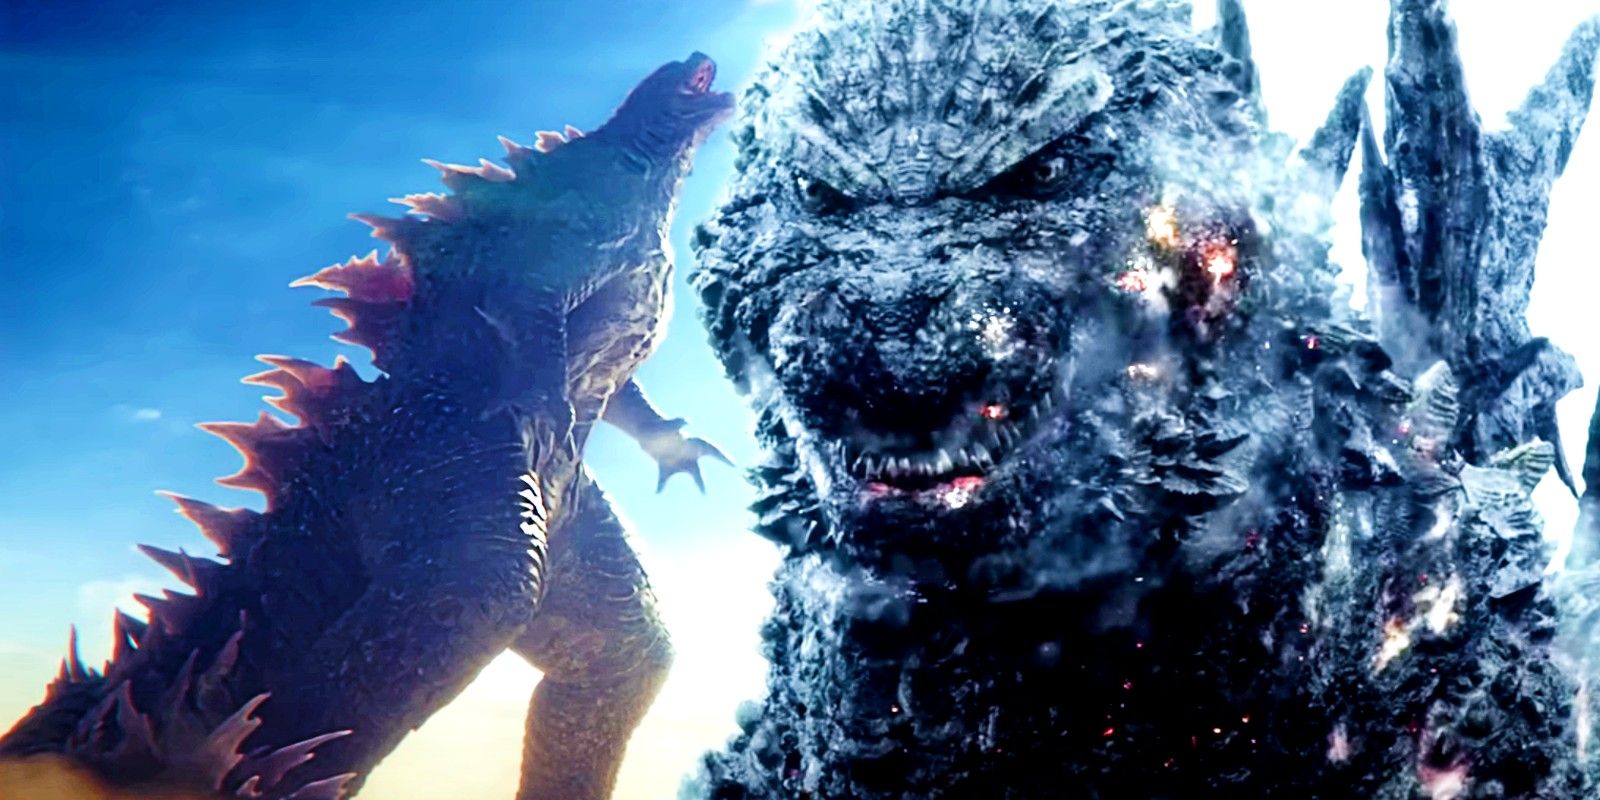 Godzilla screaming in Godzilla x Kong and Gojira smiling in Godzilla Minus One